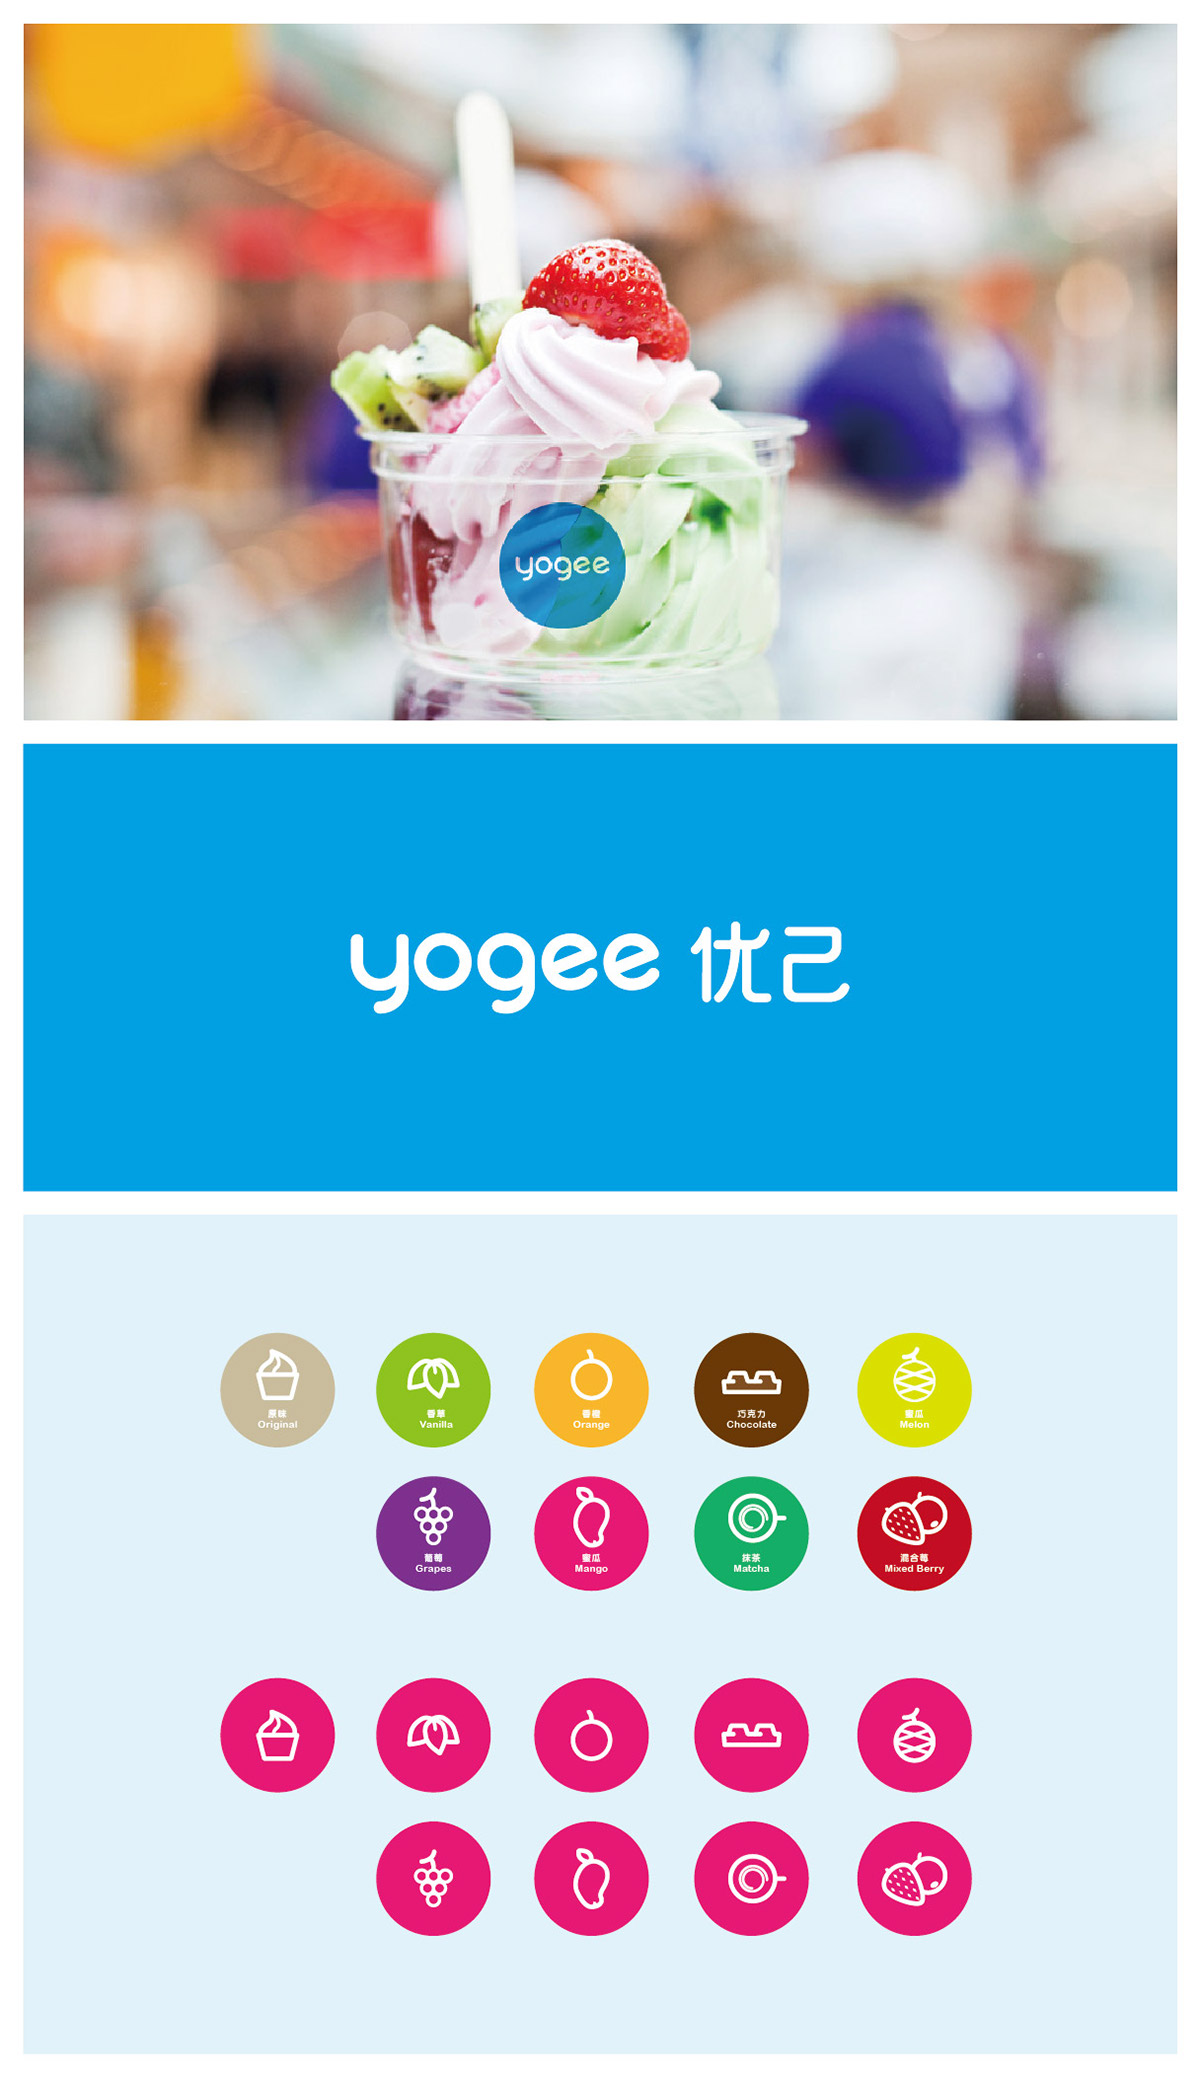 yogurt Space 